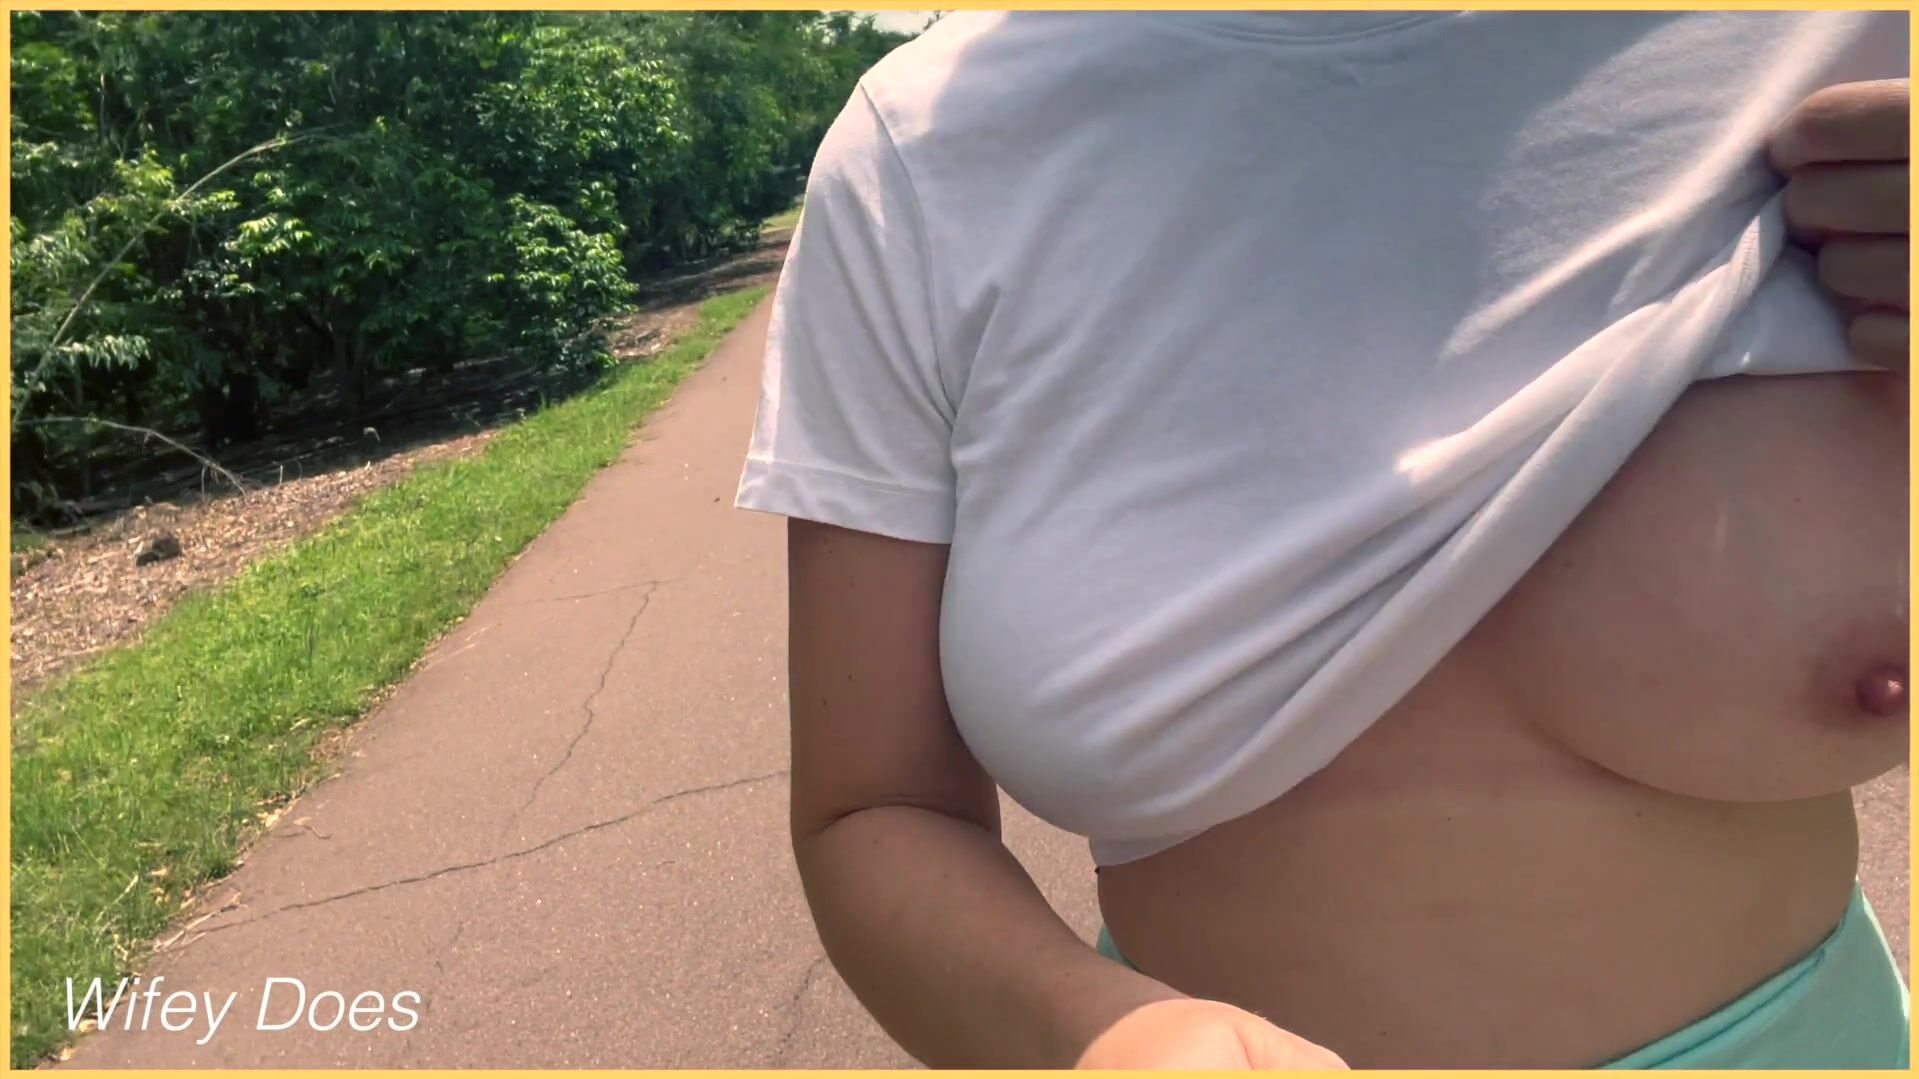 Femme amatrice, jogging en plein air, nue, en public Risky public dare regarder en ligne image image